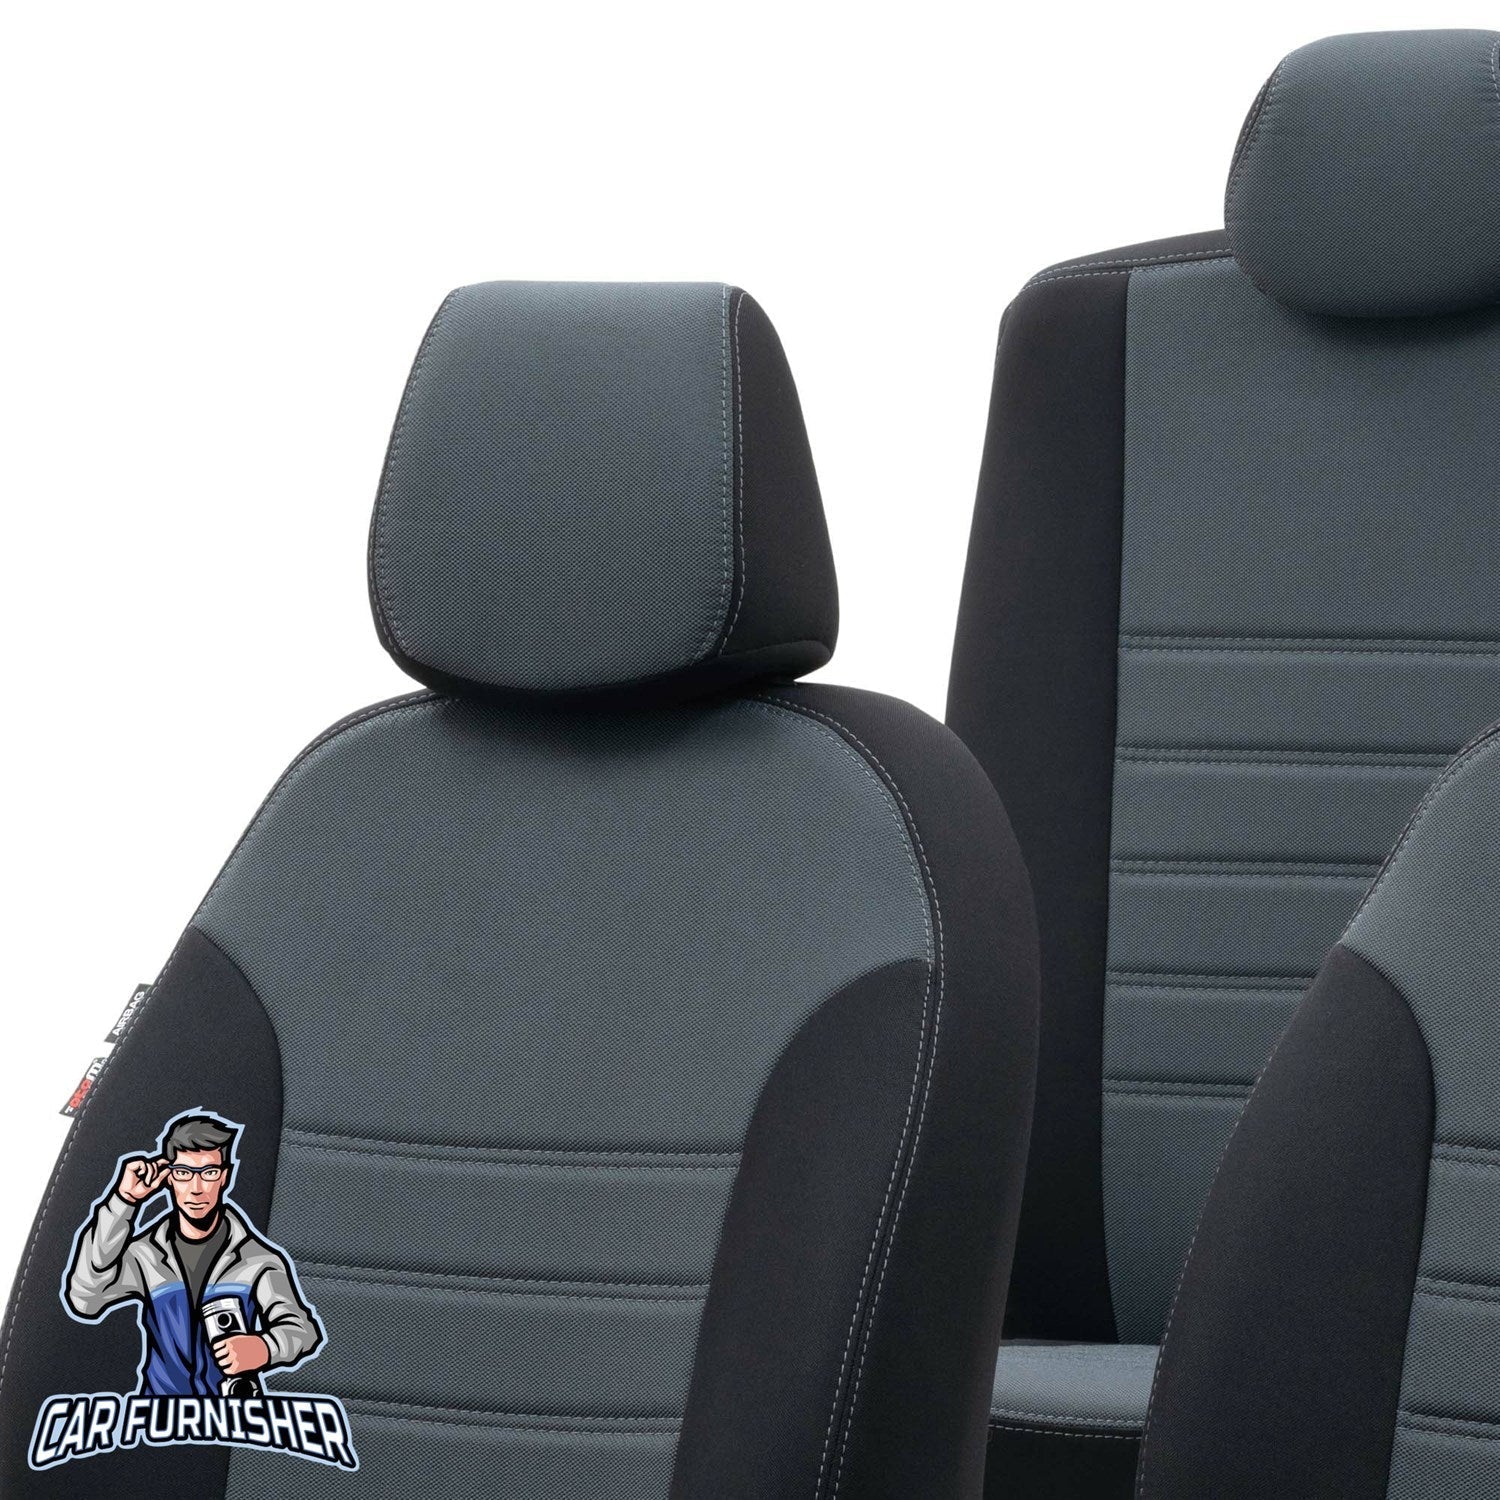 Ford Tourneo Courier Seat Covers Original Jacquard Design Smoked Black Jacquard Fabric